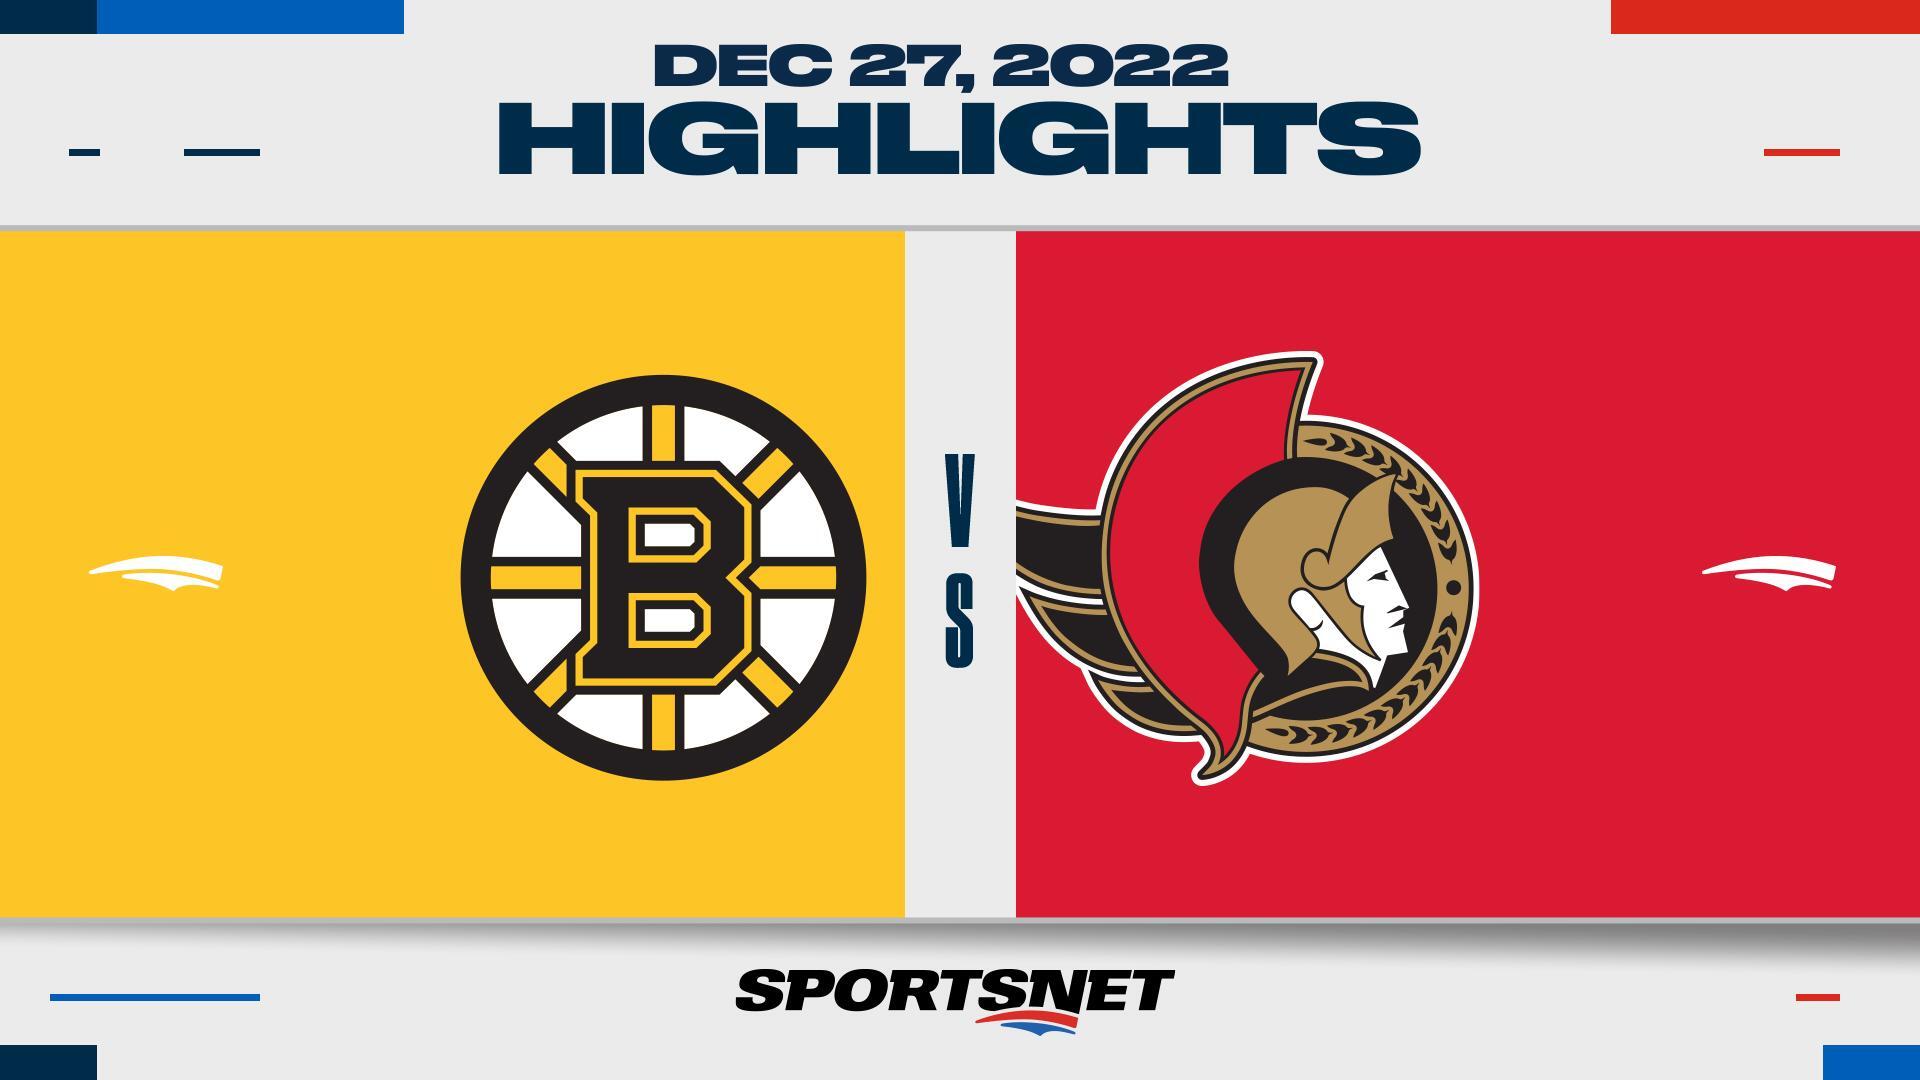 Golden Knights @ Kings 12/27  NHL Highlights 2022 